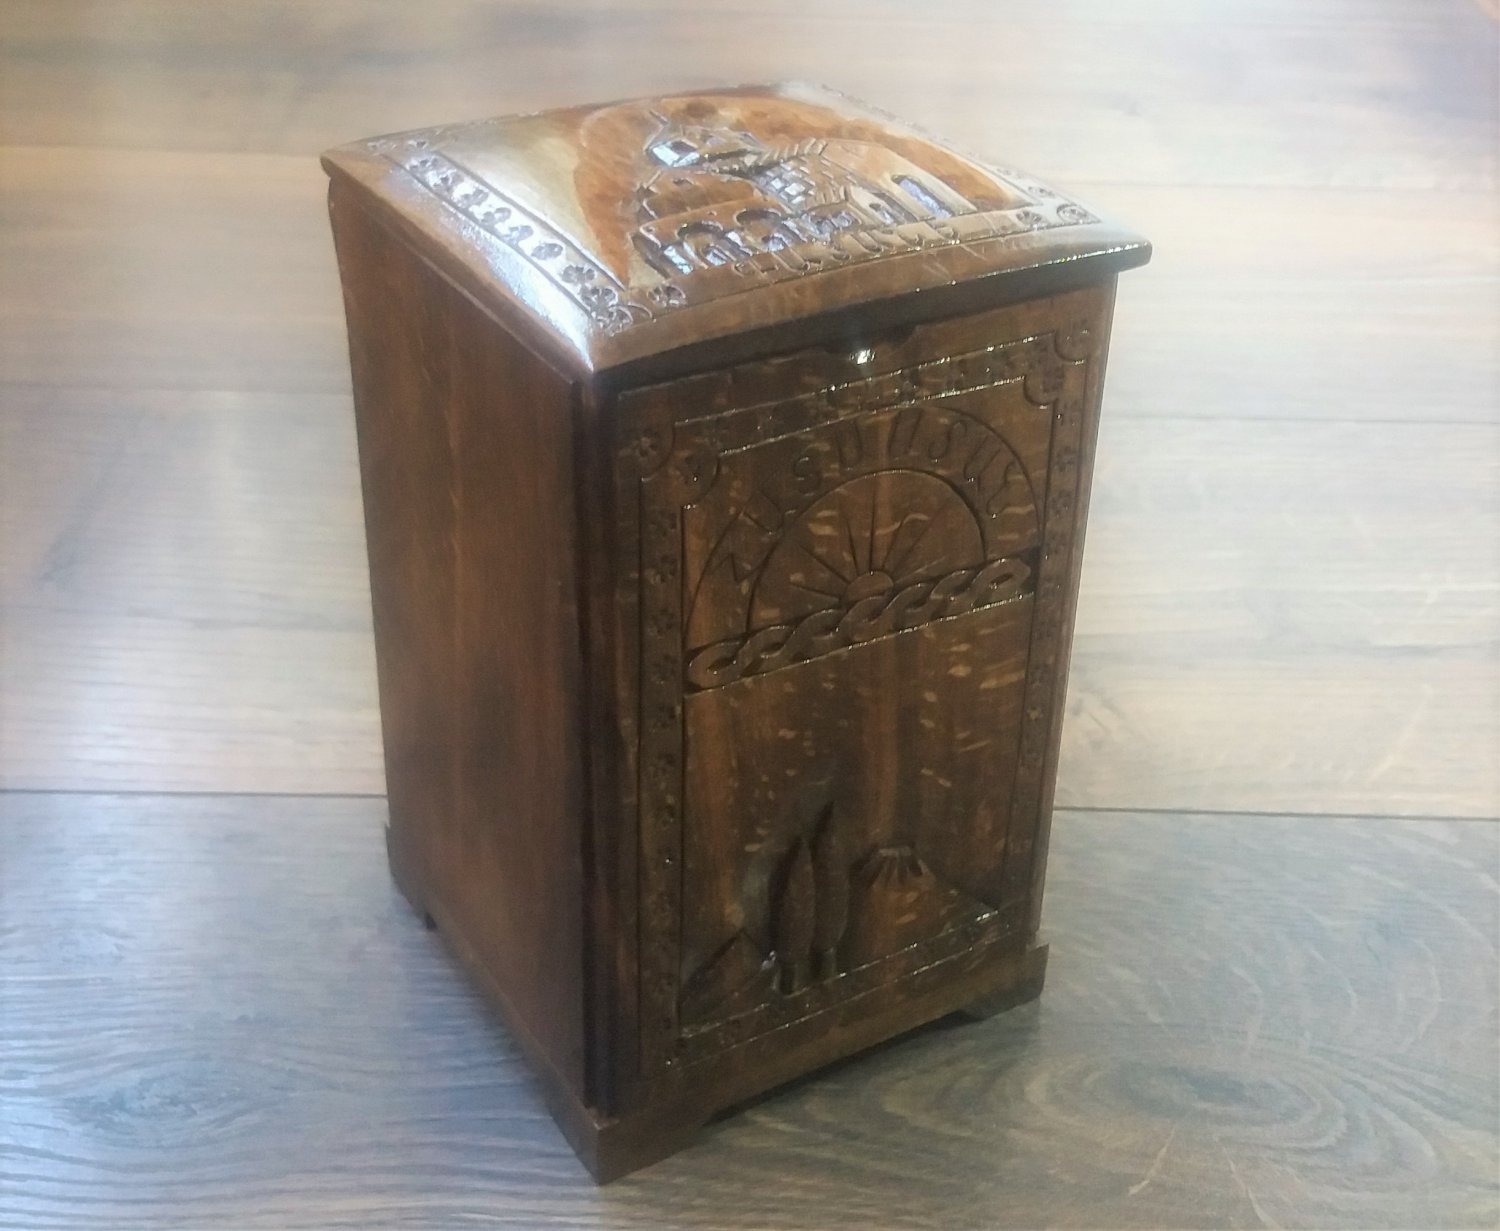 Handcrafted Armenian Wooden Box with Mount Ararat and Saint Gayane Church, Kitchen Storage Box